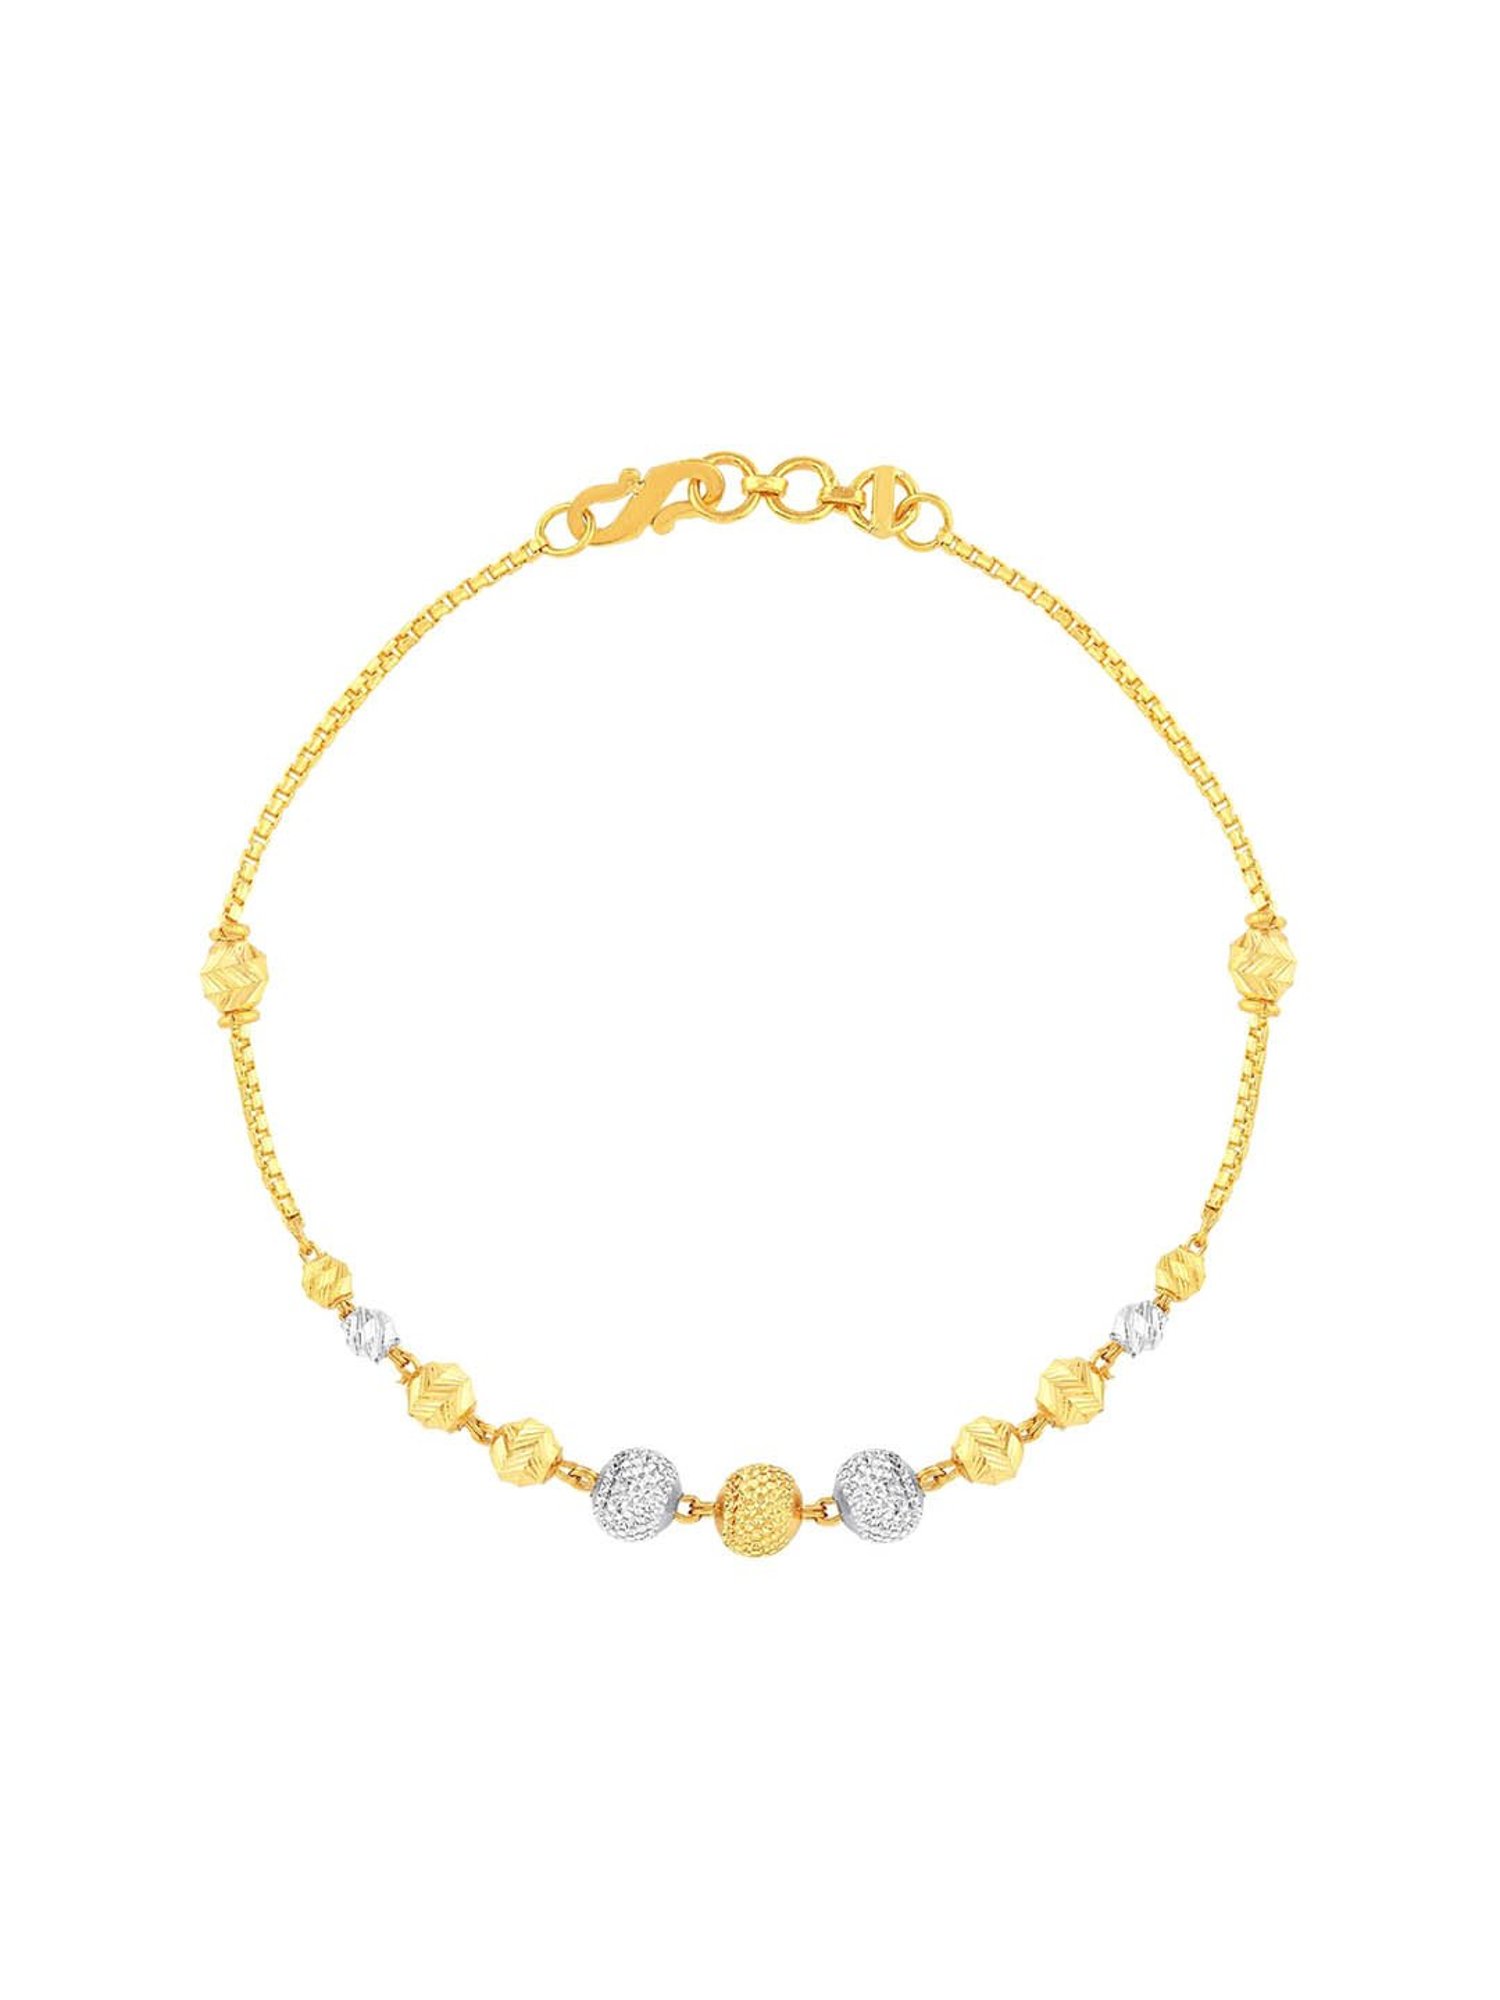 Malabar Gold Bracelet Designs With Price| Kada Bangles Designs In Gold| Malabar  Gold Bracelet Bangle - YouTube